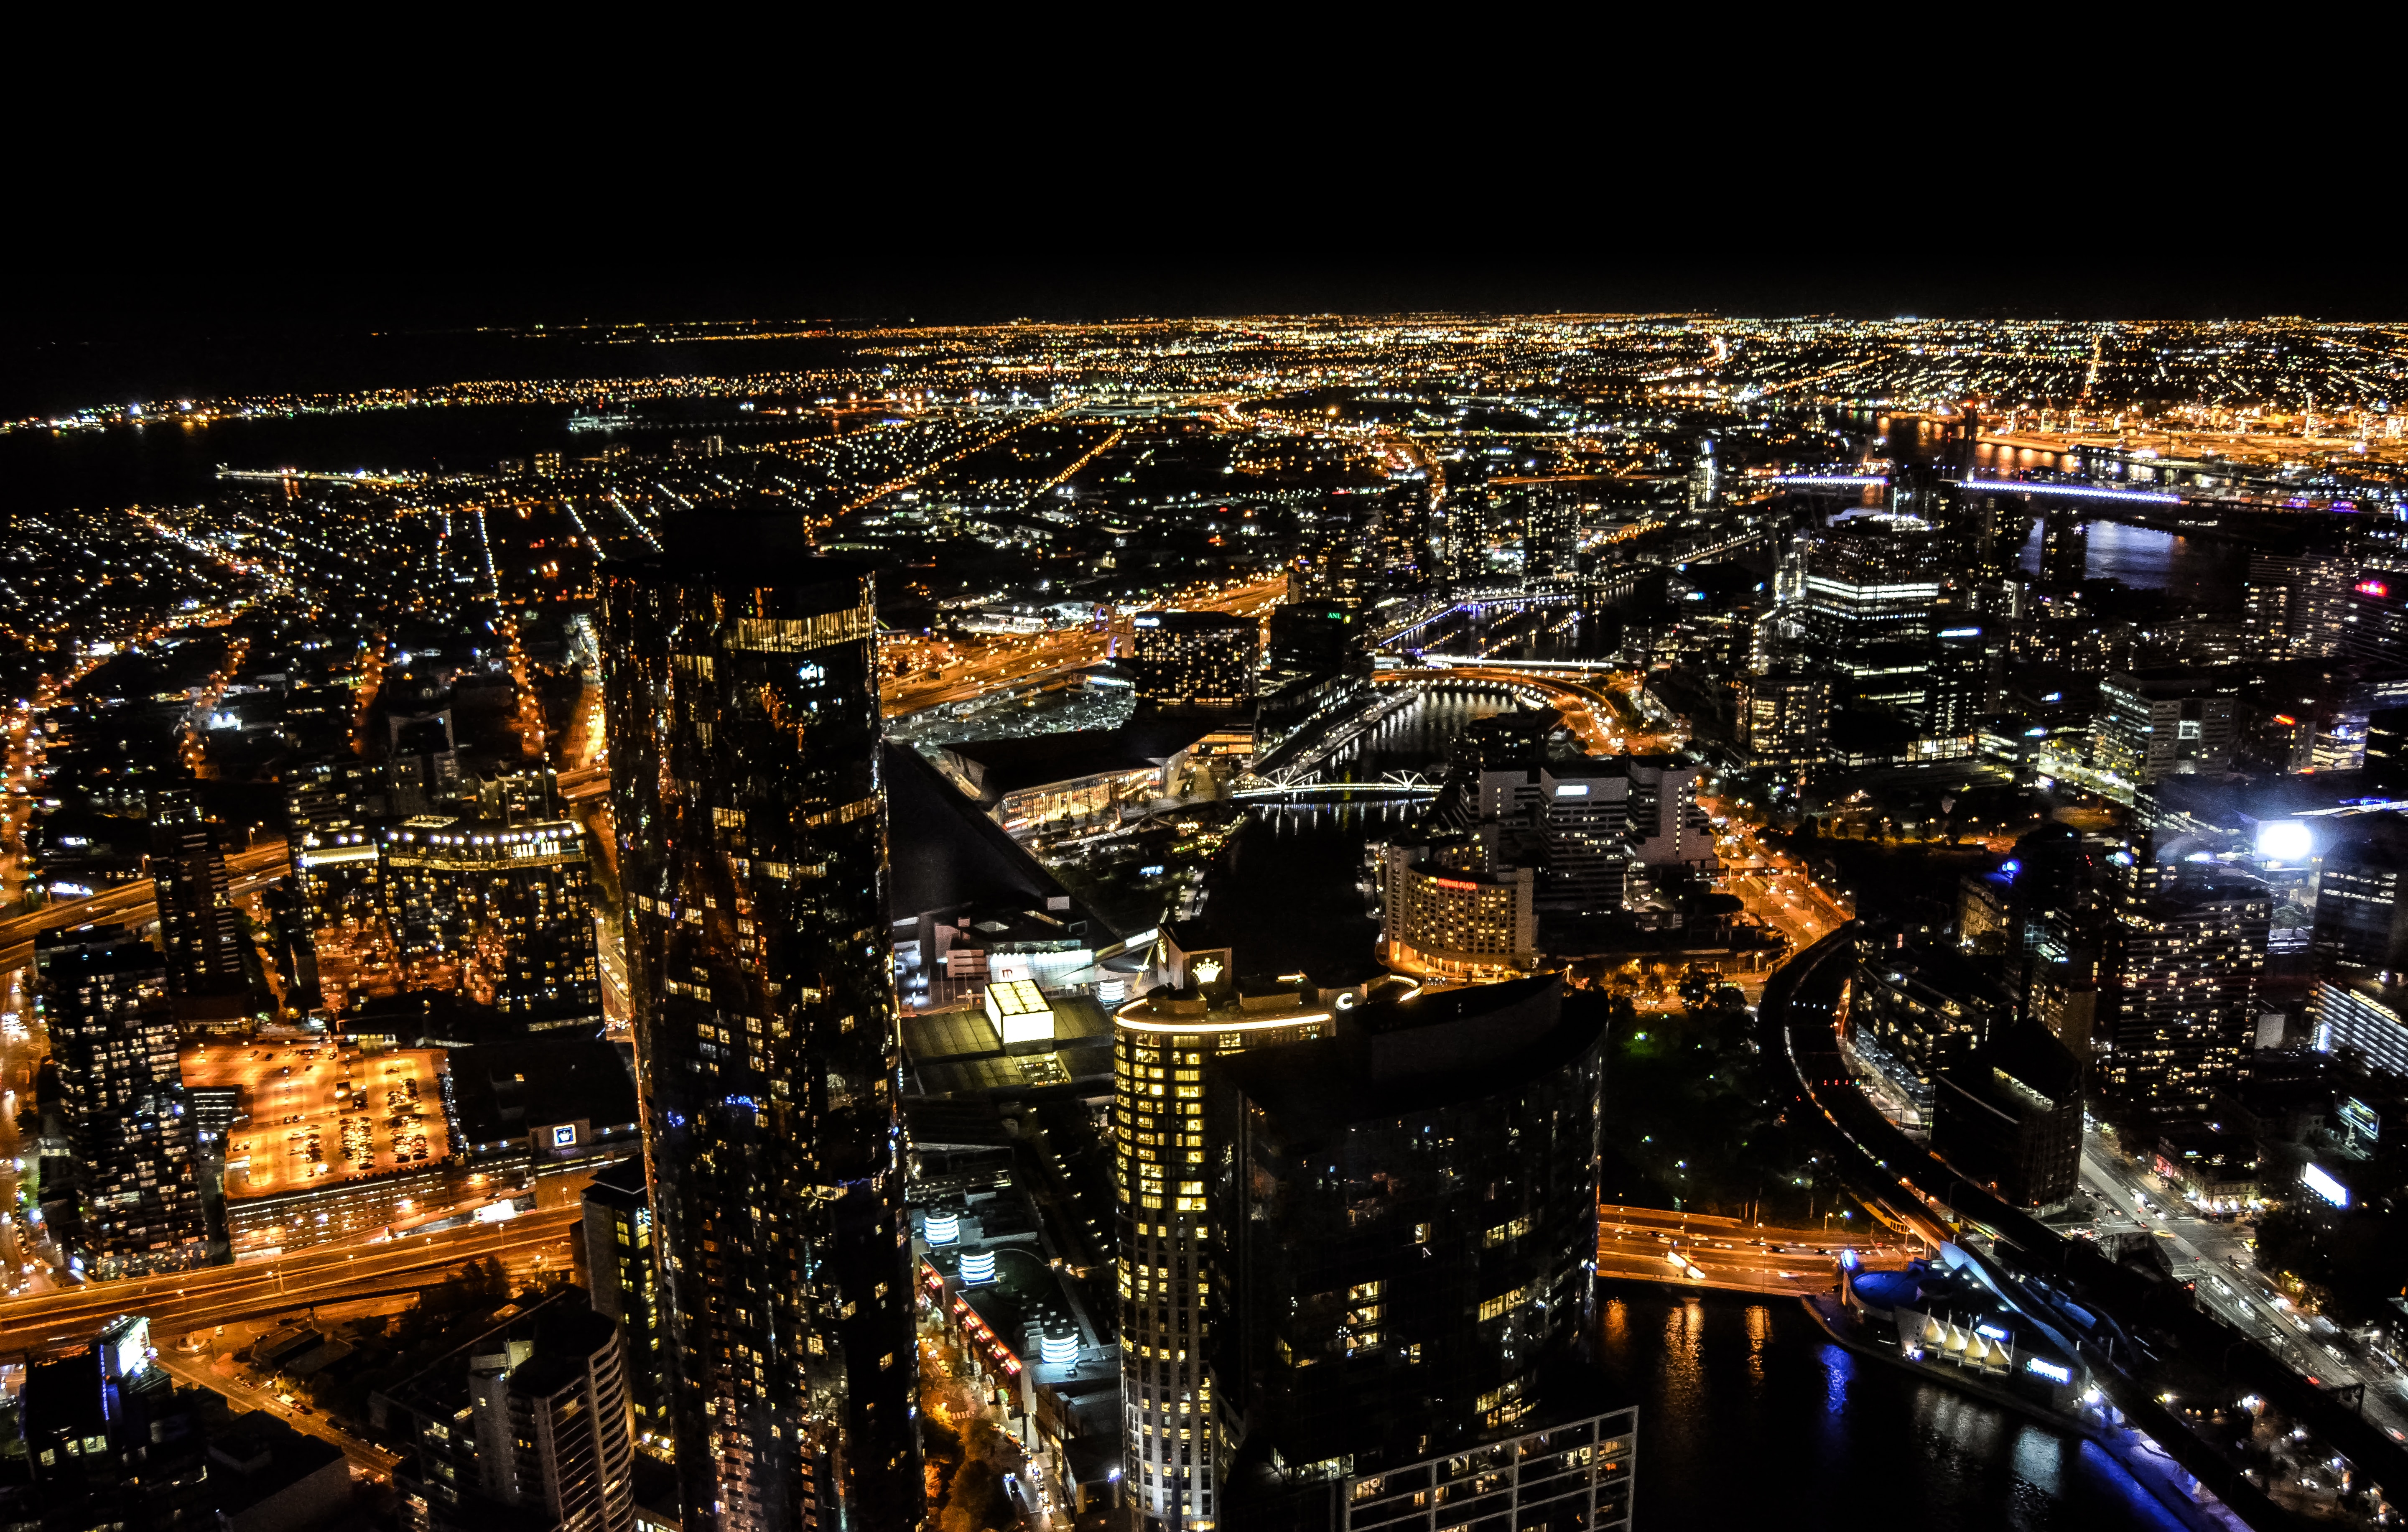 A night time city scape of Melbourne, Australia.